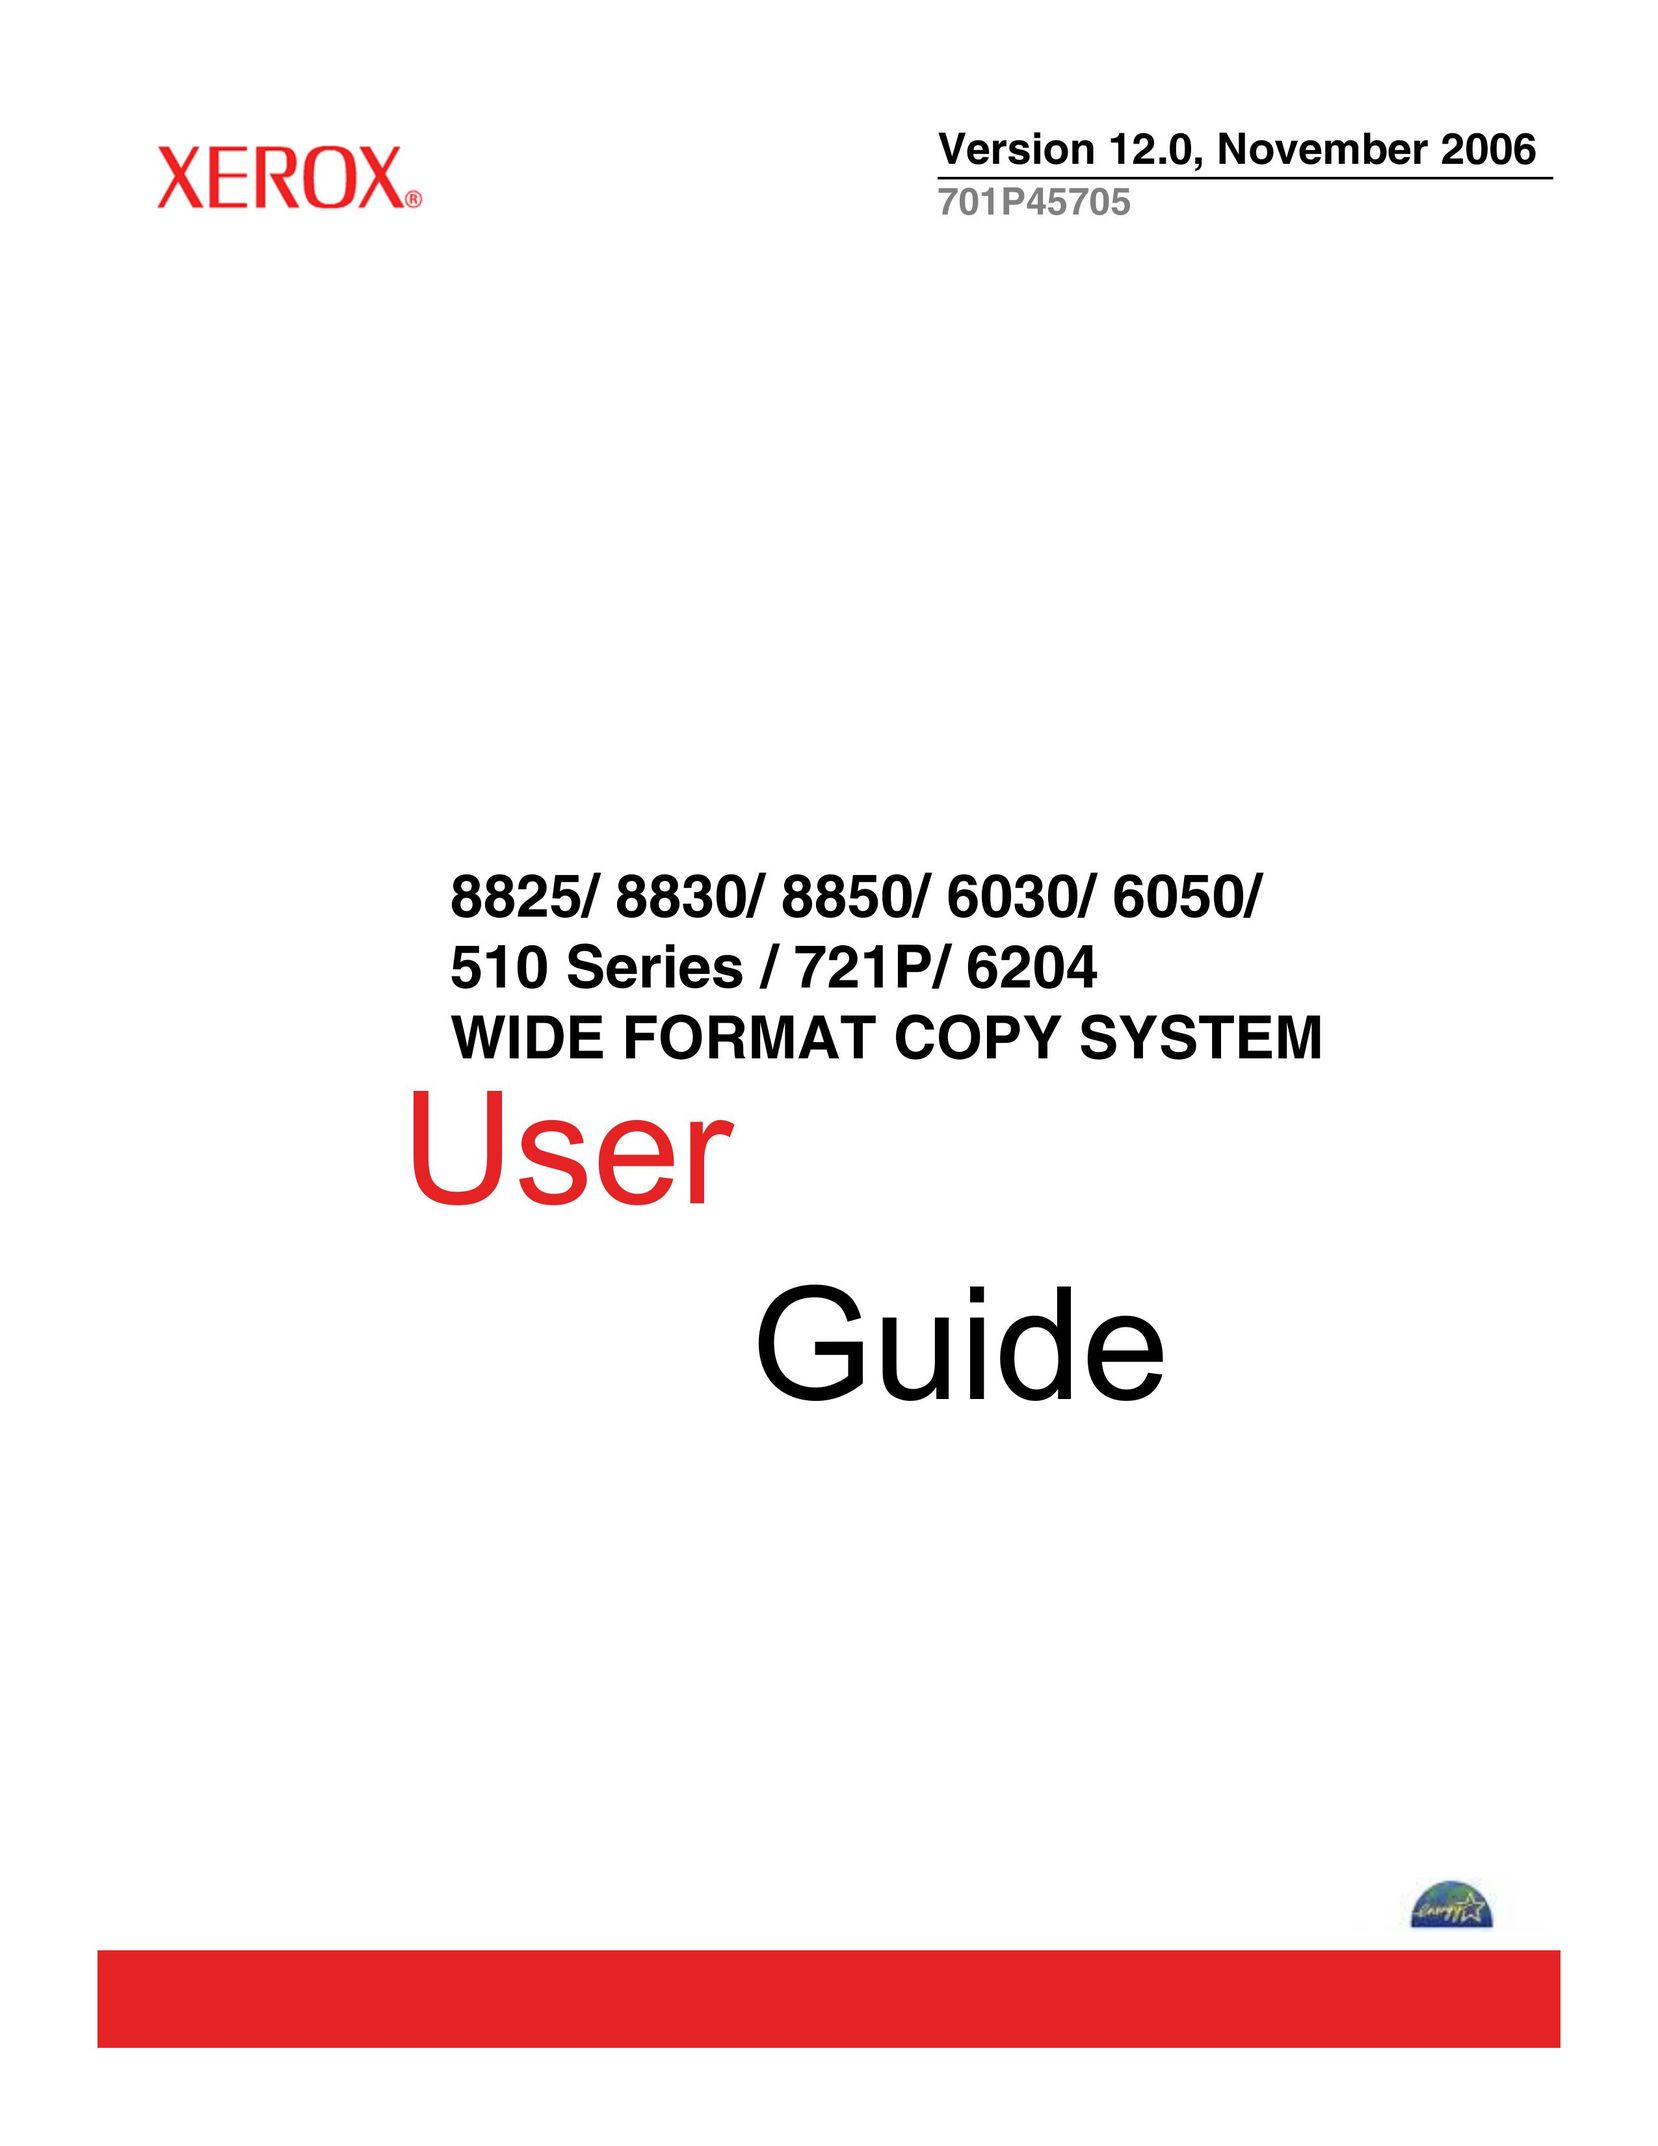 Xerox 510 Series Copier User Manual